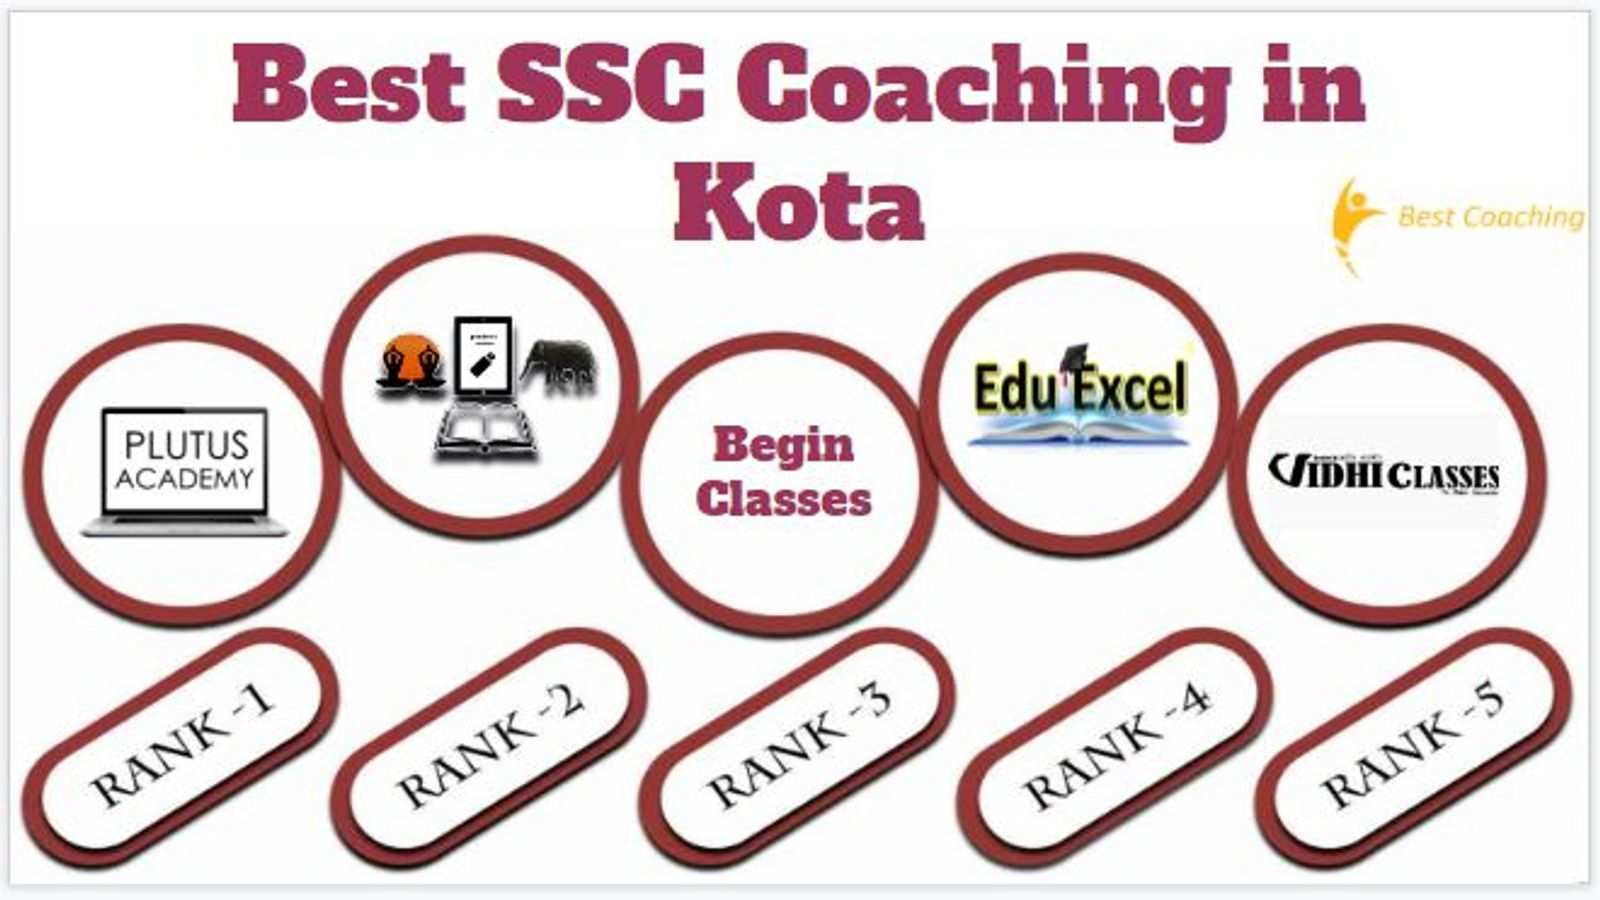 Best SSC Coaching in Kota